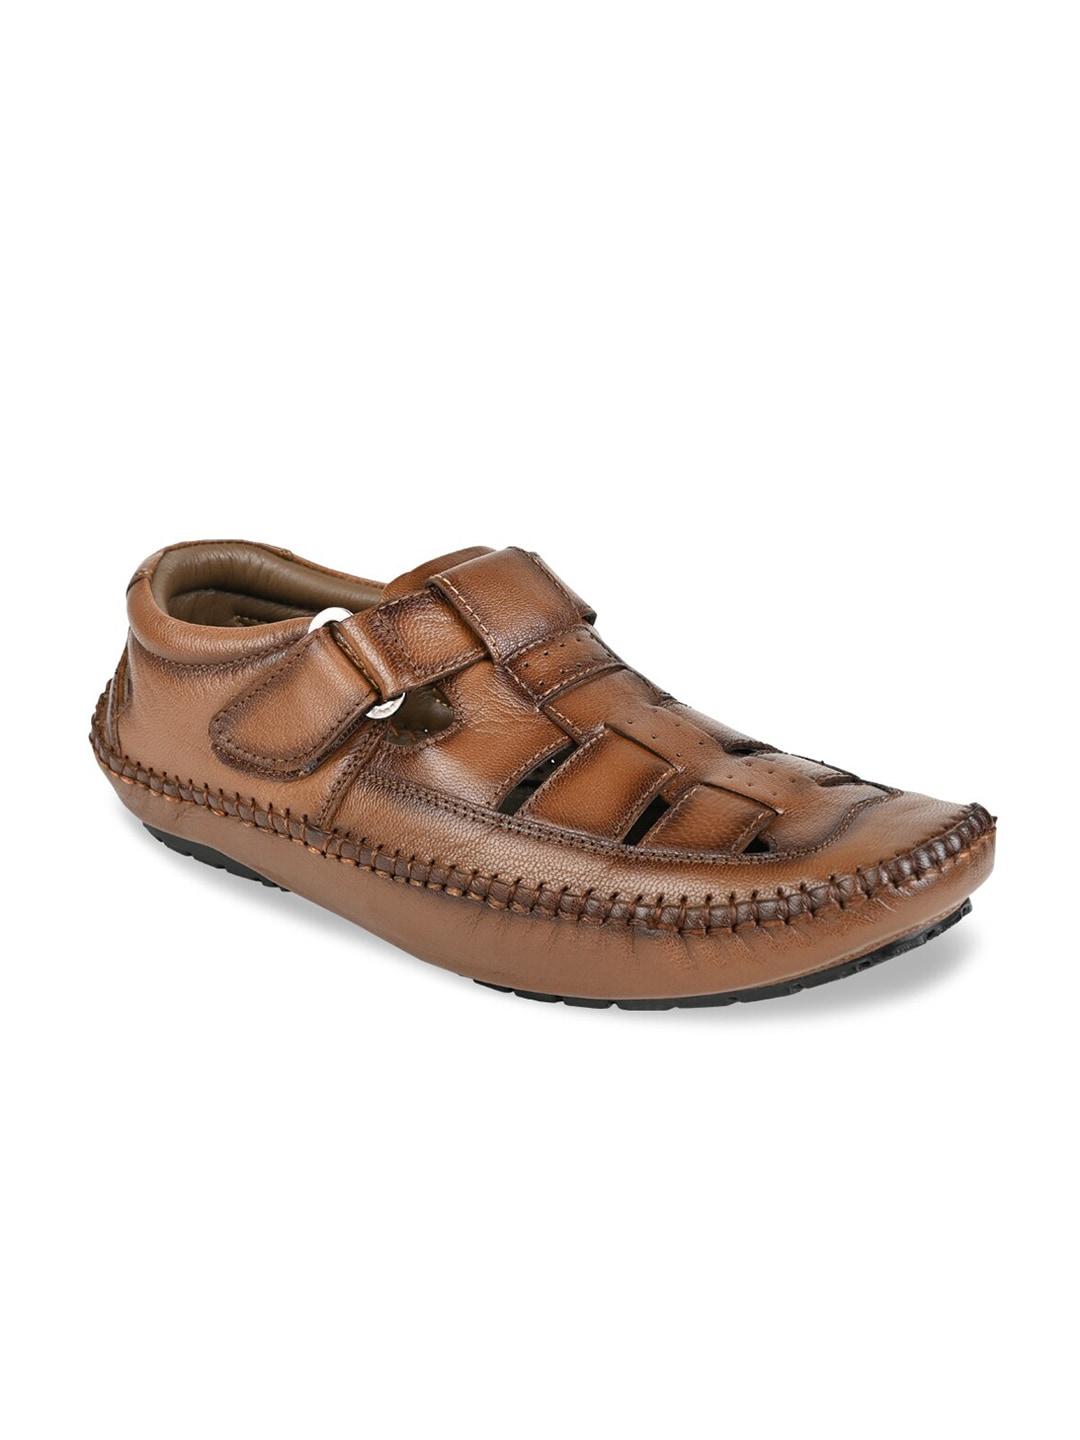 Regal Men Brown Leather Fisherman Sandals